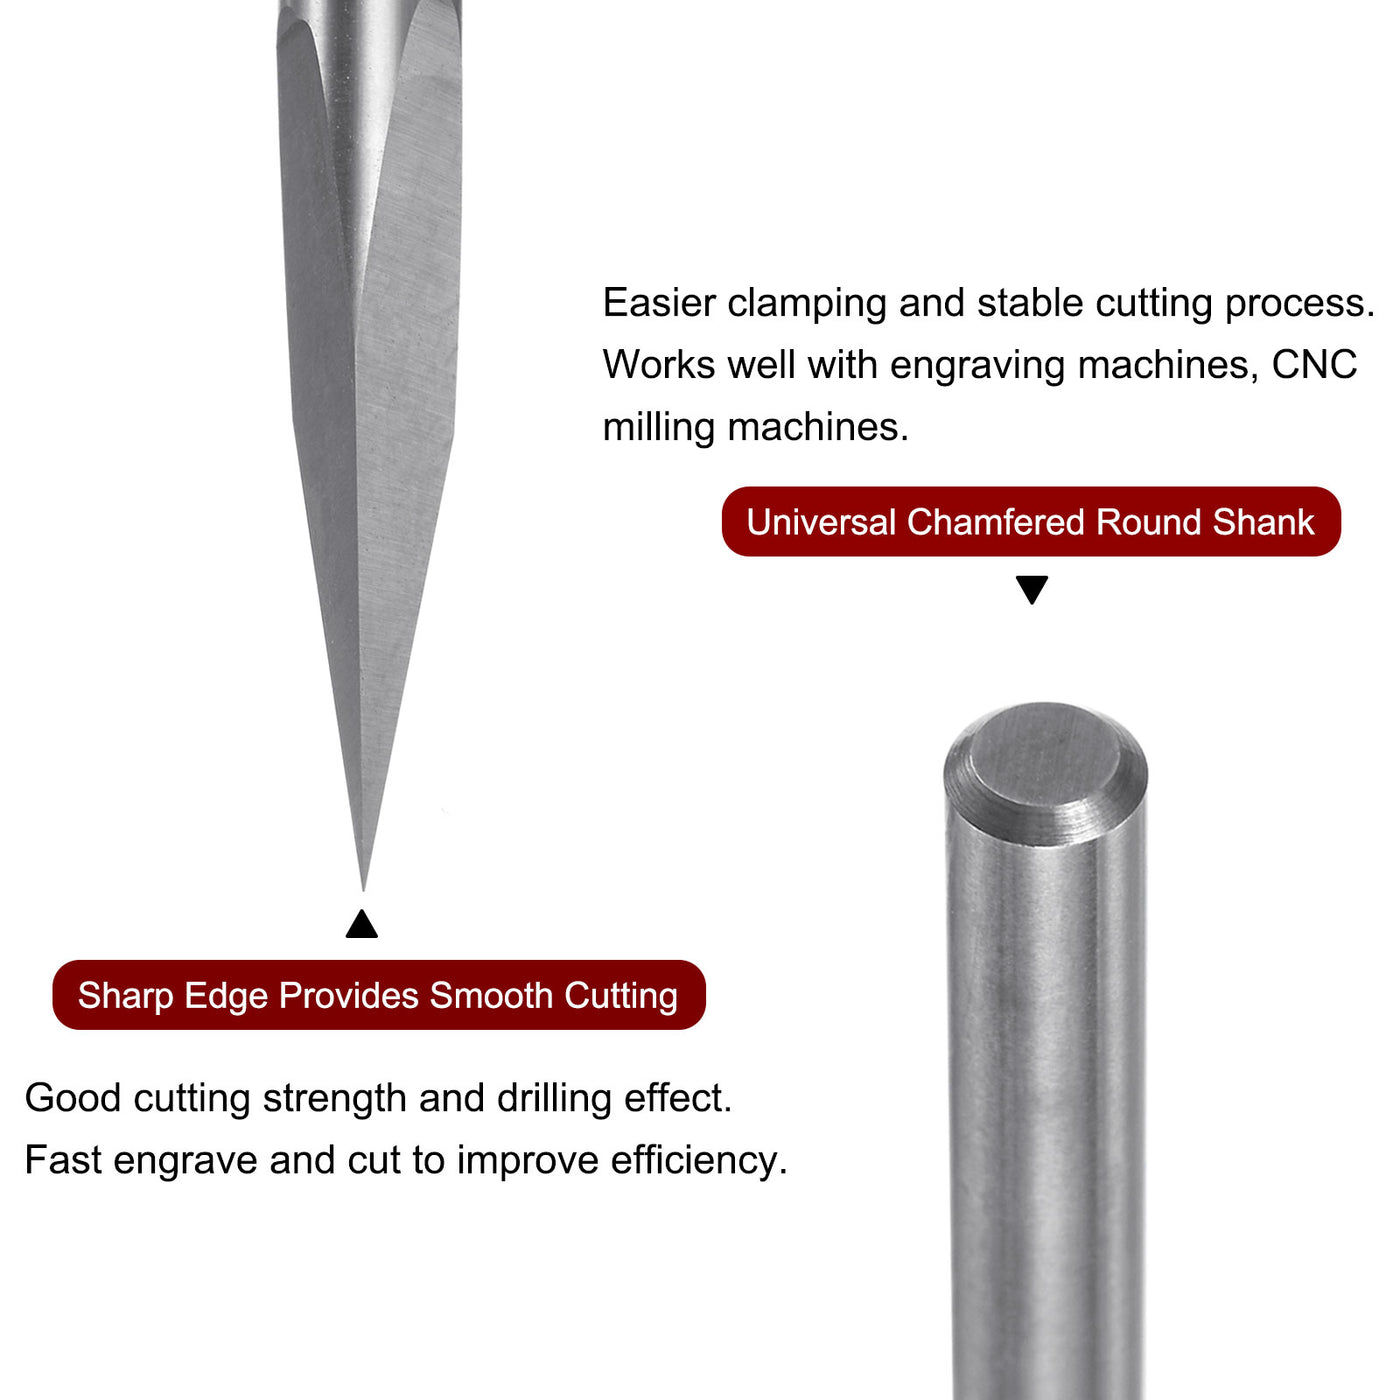 Harfington 6mm Shank 0.1mm Tip 20 Degree Carbide 3 Flutes Wood Engraving CNC Bit 2pcs